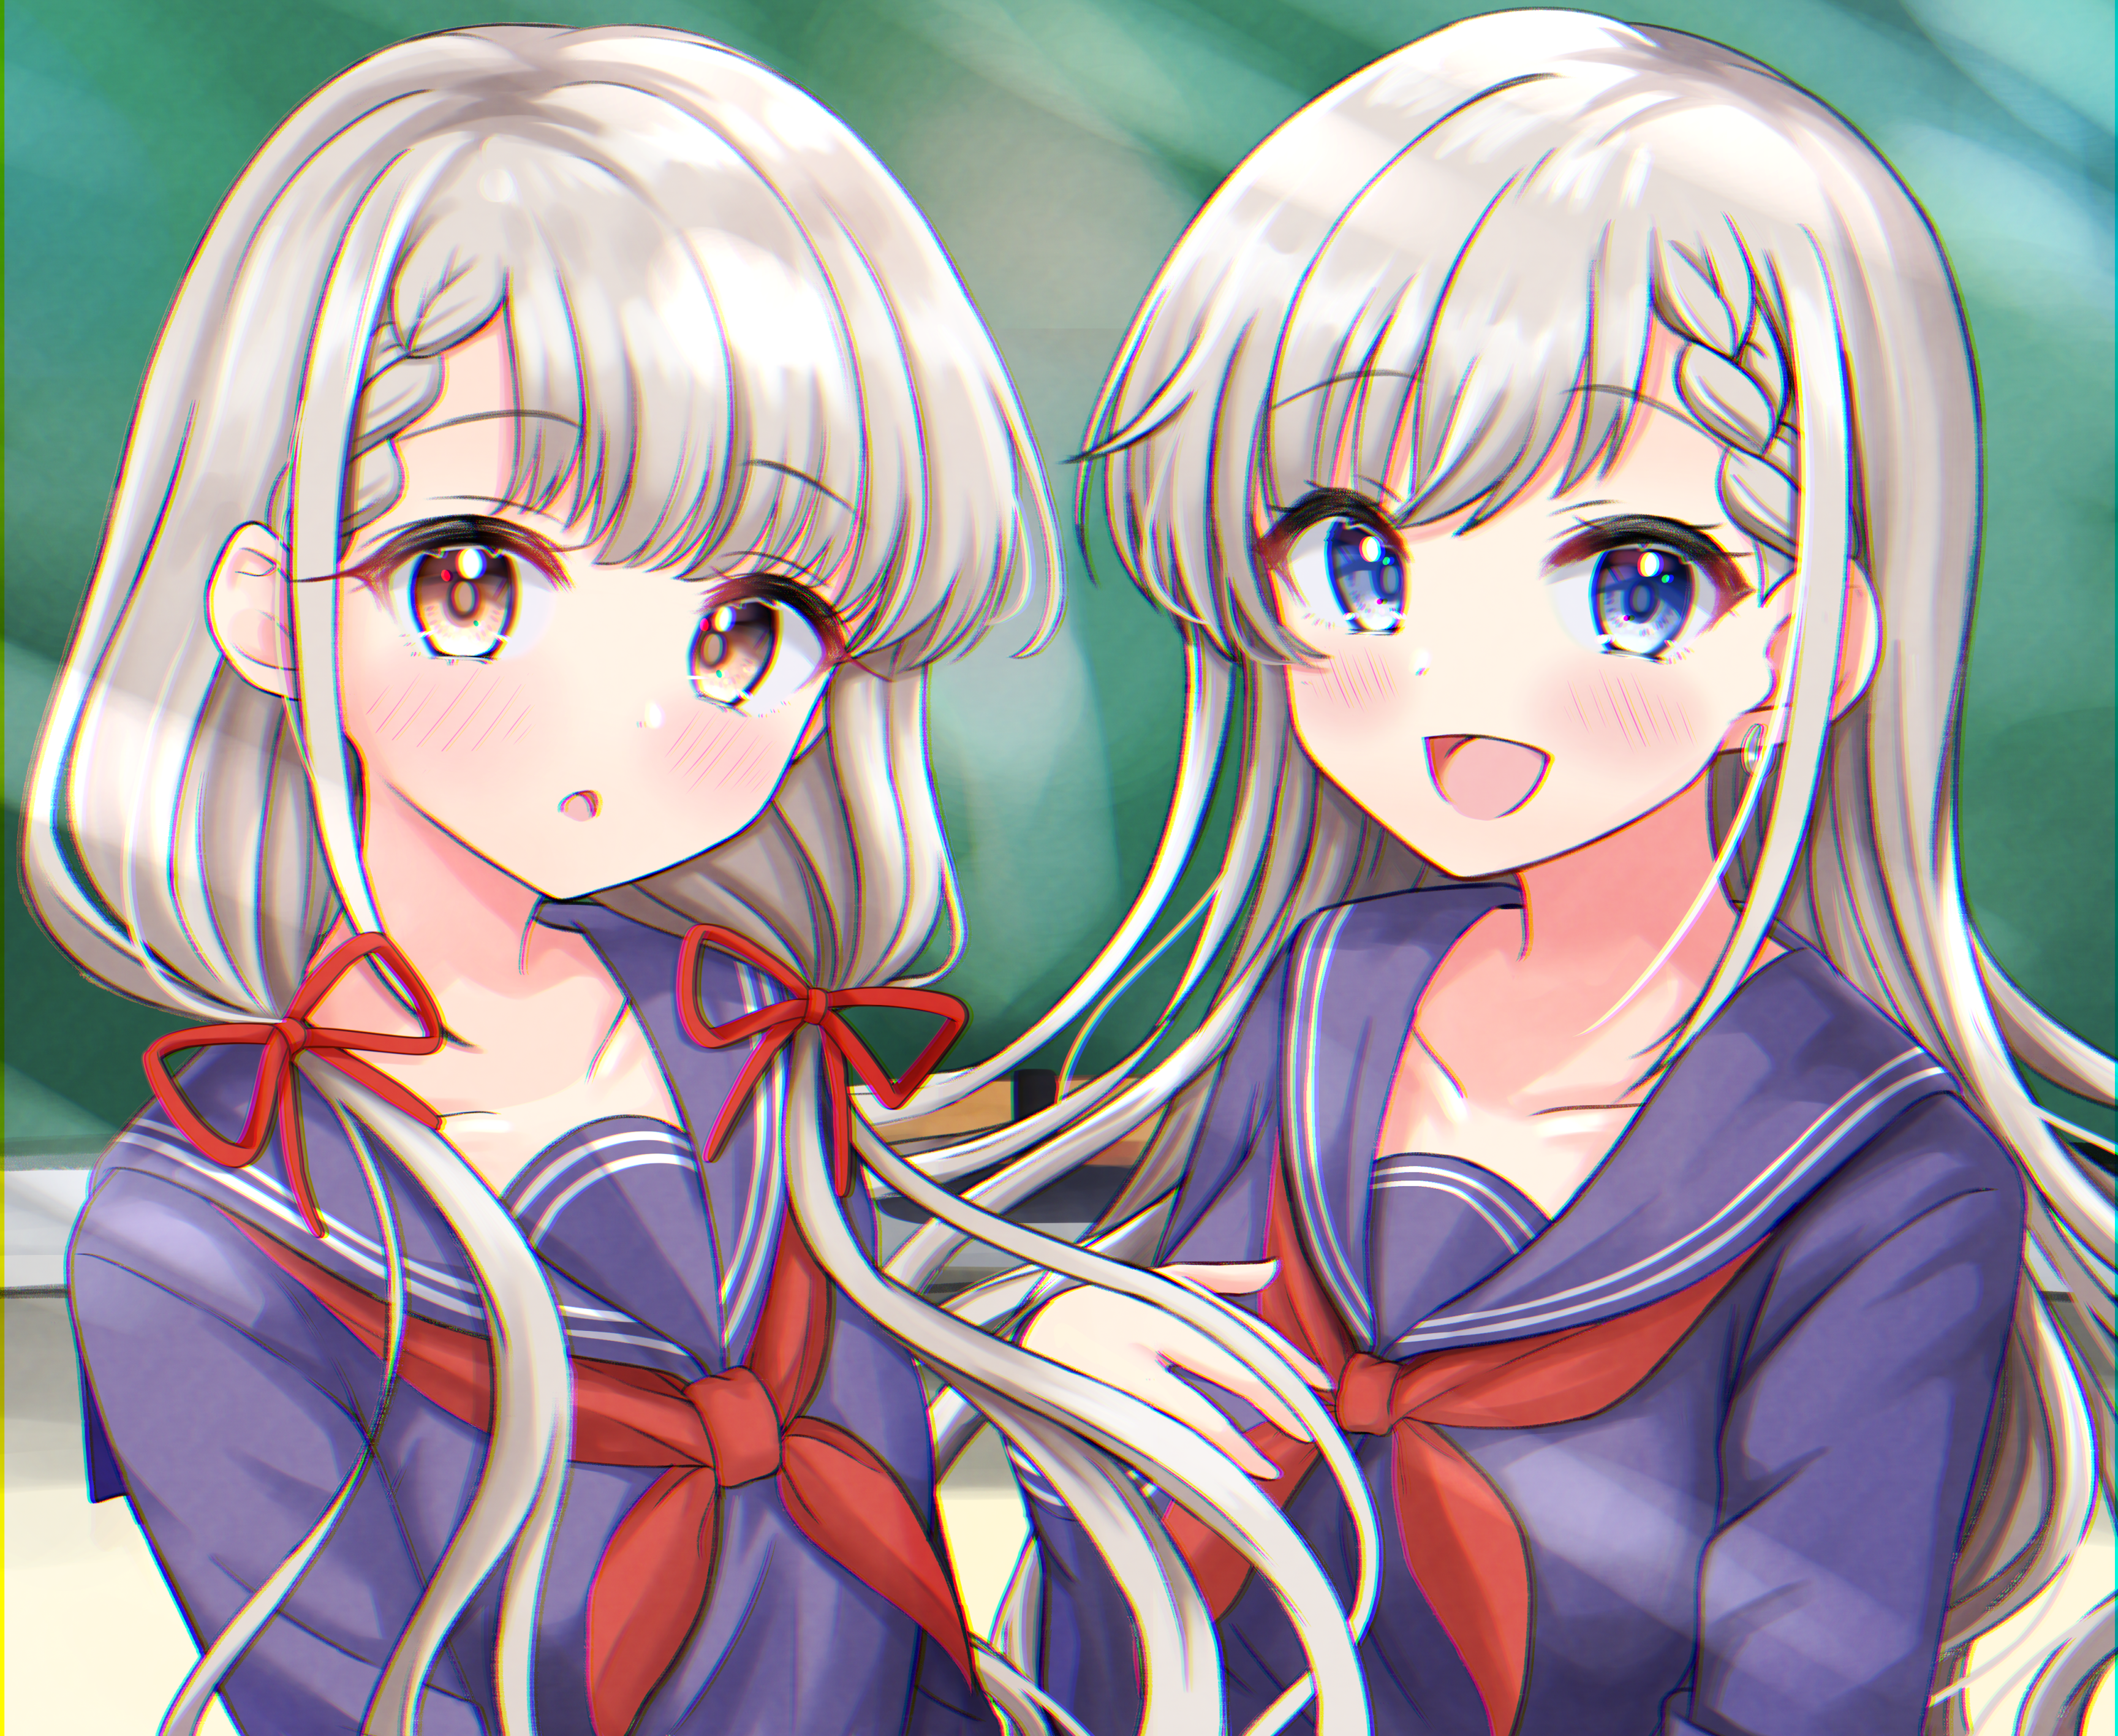 Anime 3457x2833 anime anime girls THE iDOLM@STER THE iDOLM@STER: Cinderella Girls Hisakawa Hayate Hisakawa Nagi long hair gray hair twins two women artwork digital art fan art school uniform